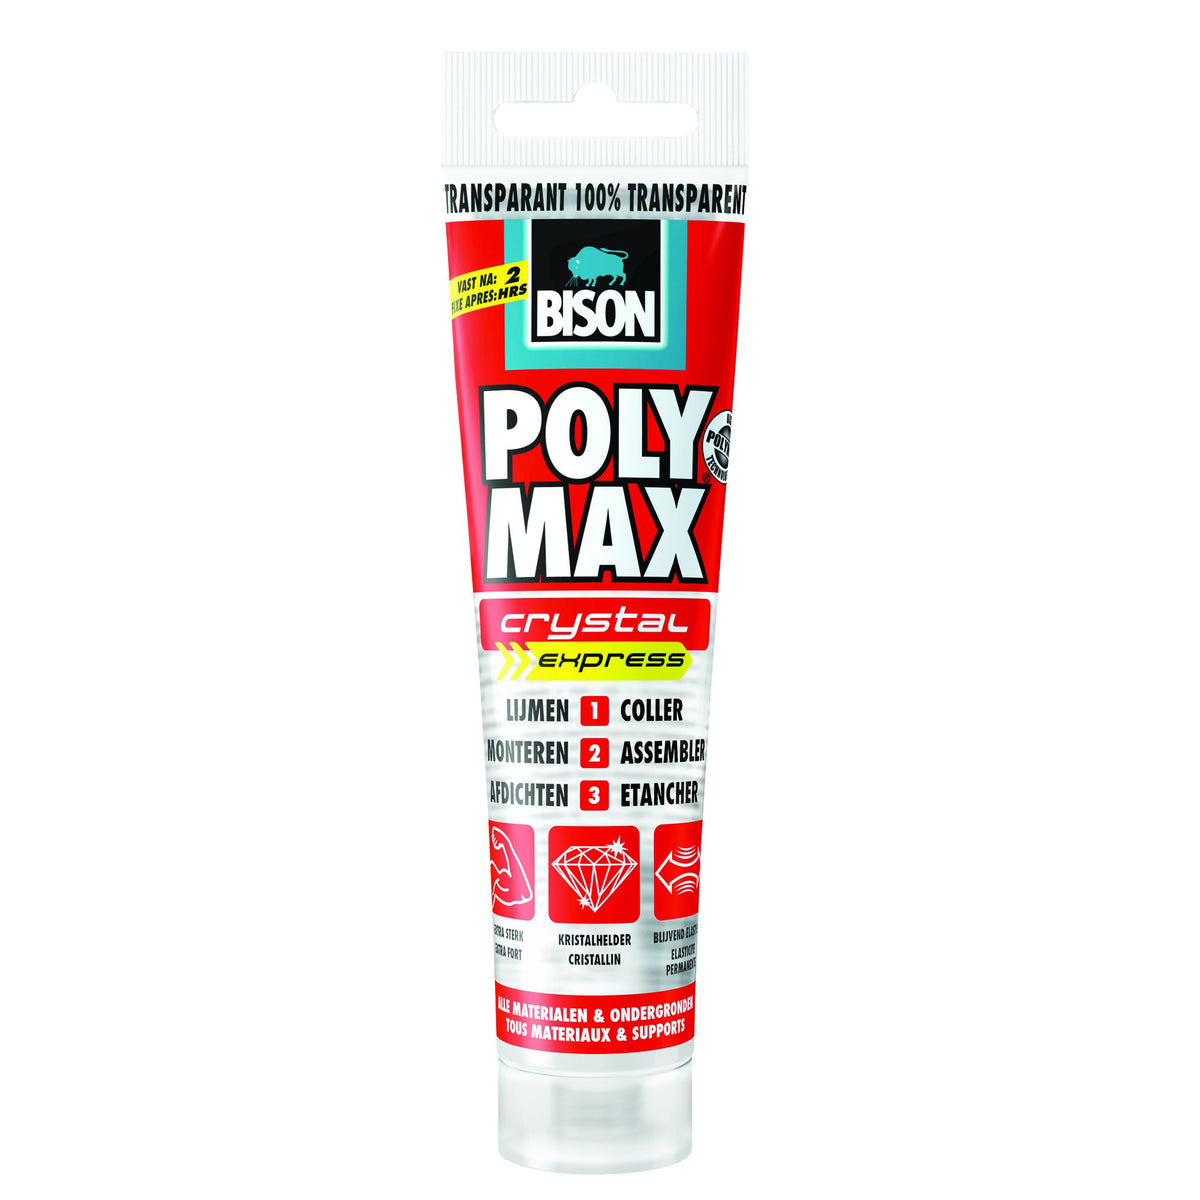 Bison universele montagelijm Poly Max Crystal Express 115g